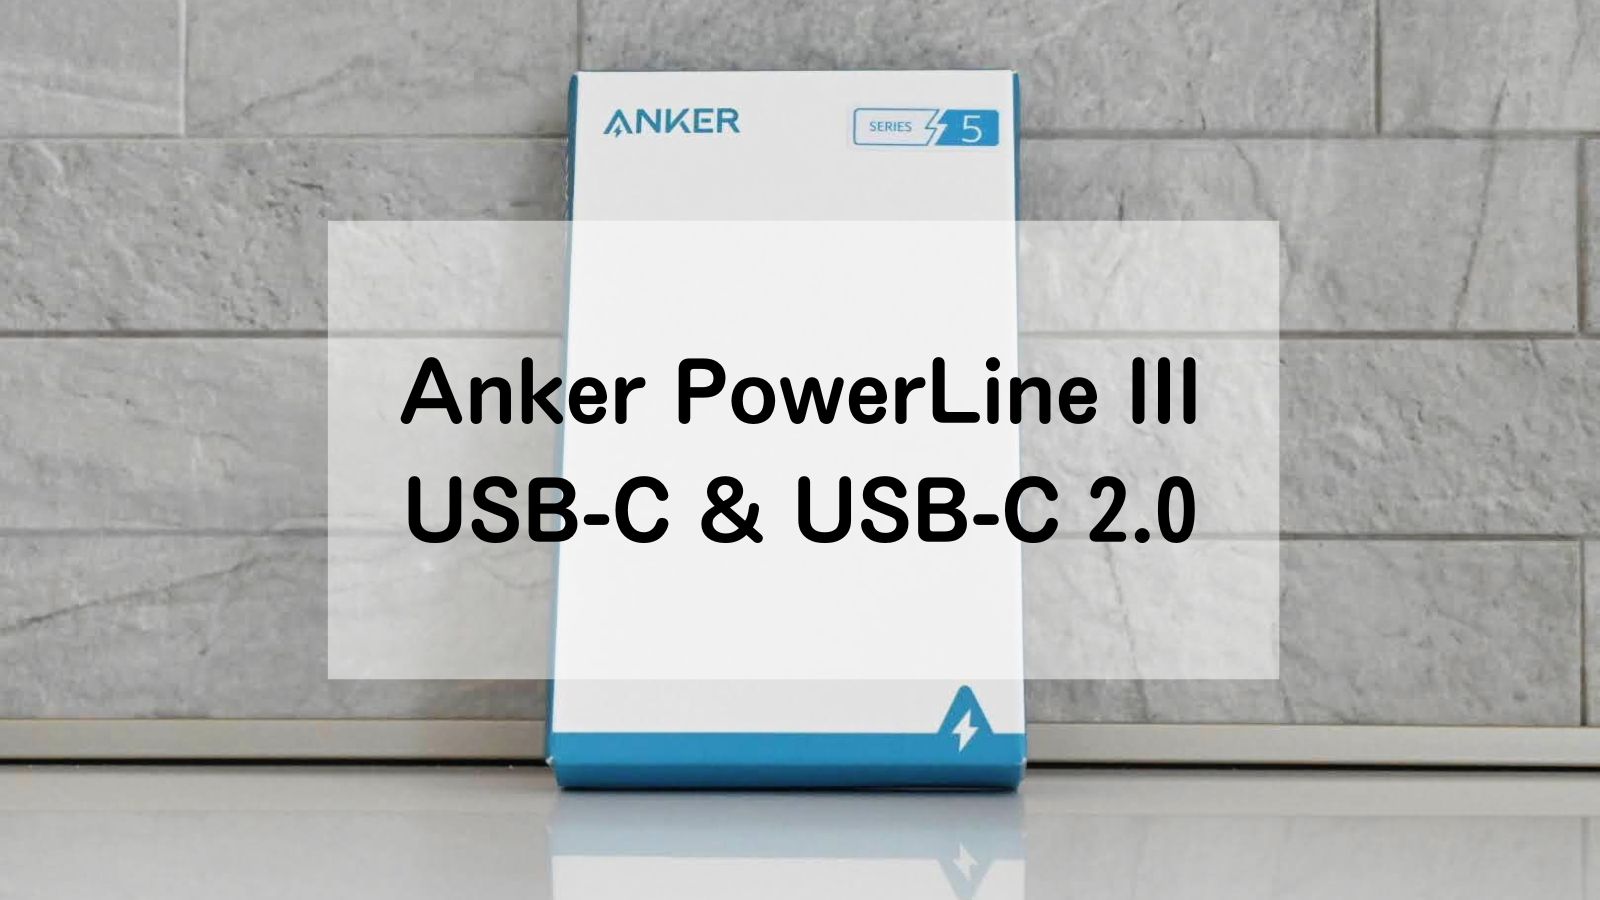 Anker PowerLine III USB-C & USB-C 2.0